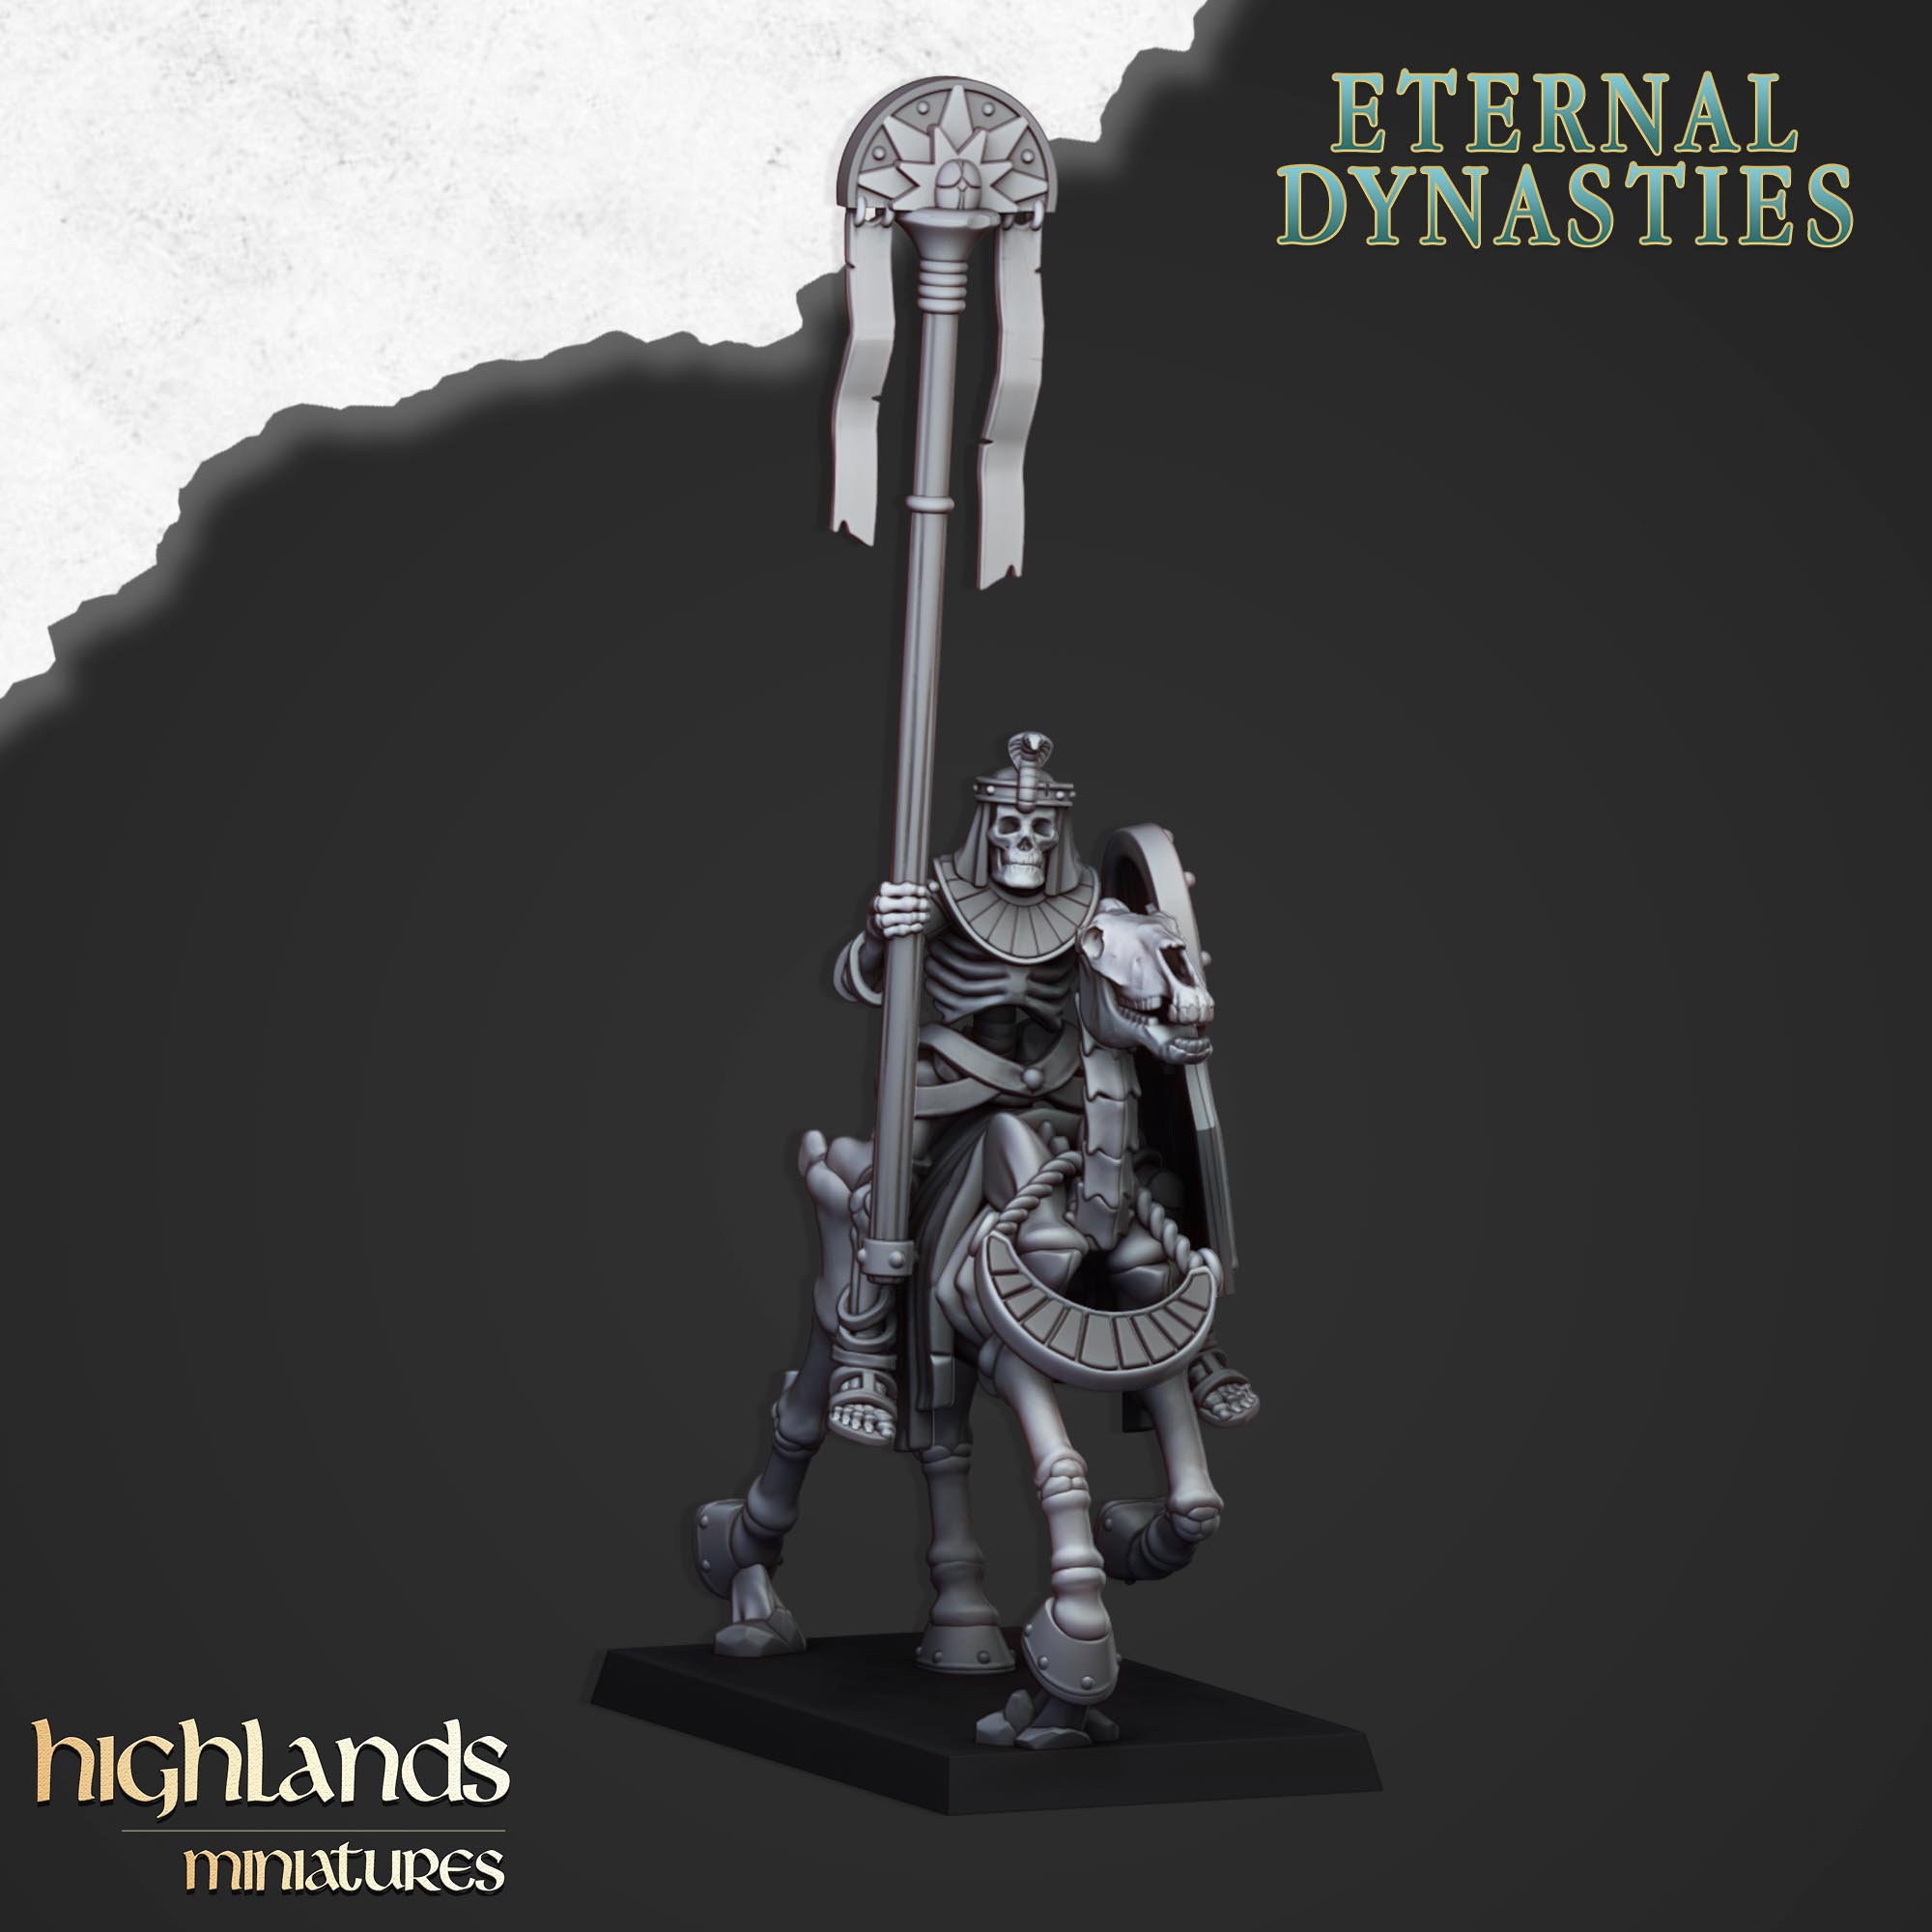 Antike Skelett-Kavalleriehauptleute (x2) - Ewige Dynastien | Highlands Miniatures